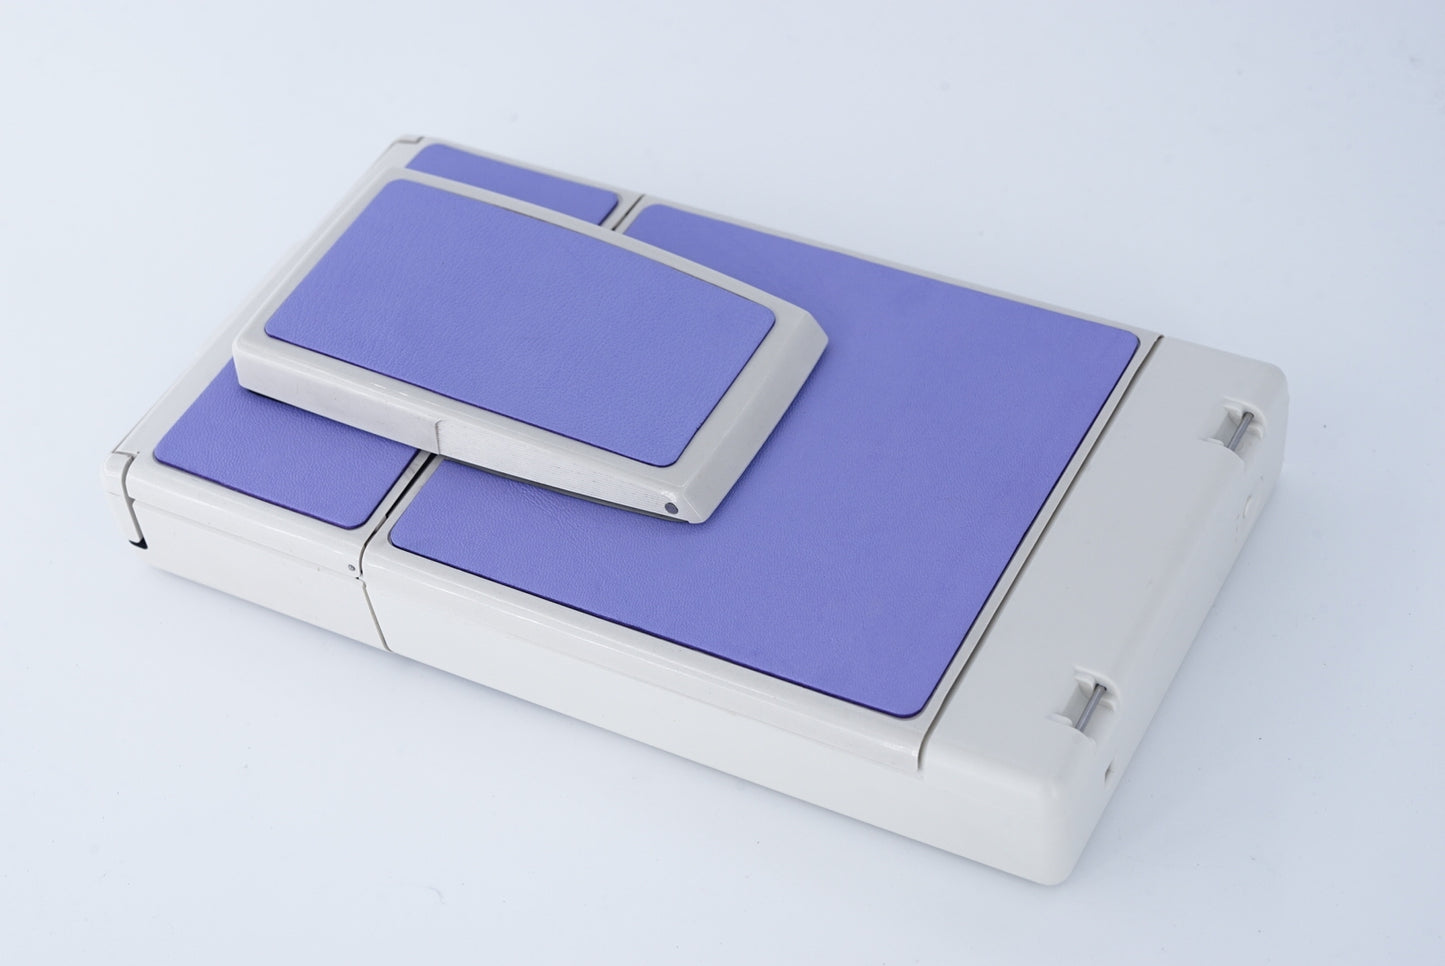 Polaroid Sx70 MODEL 2 WIHITE&PURPLE ivory camera Power kit S